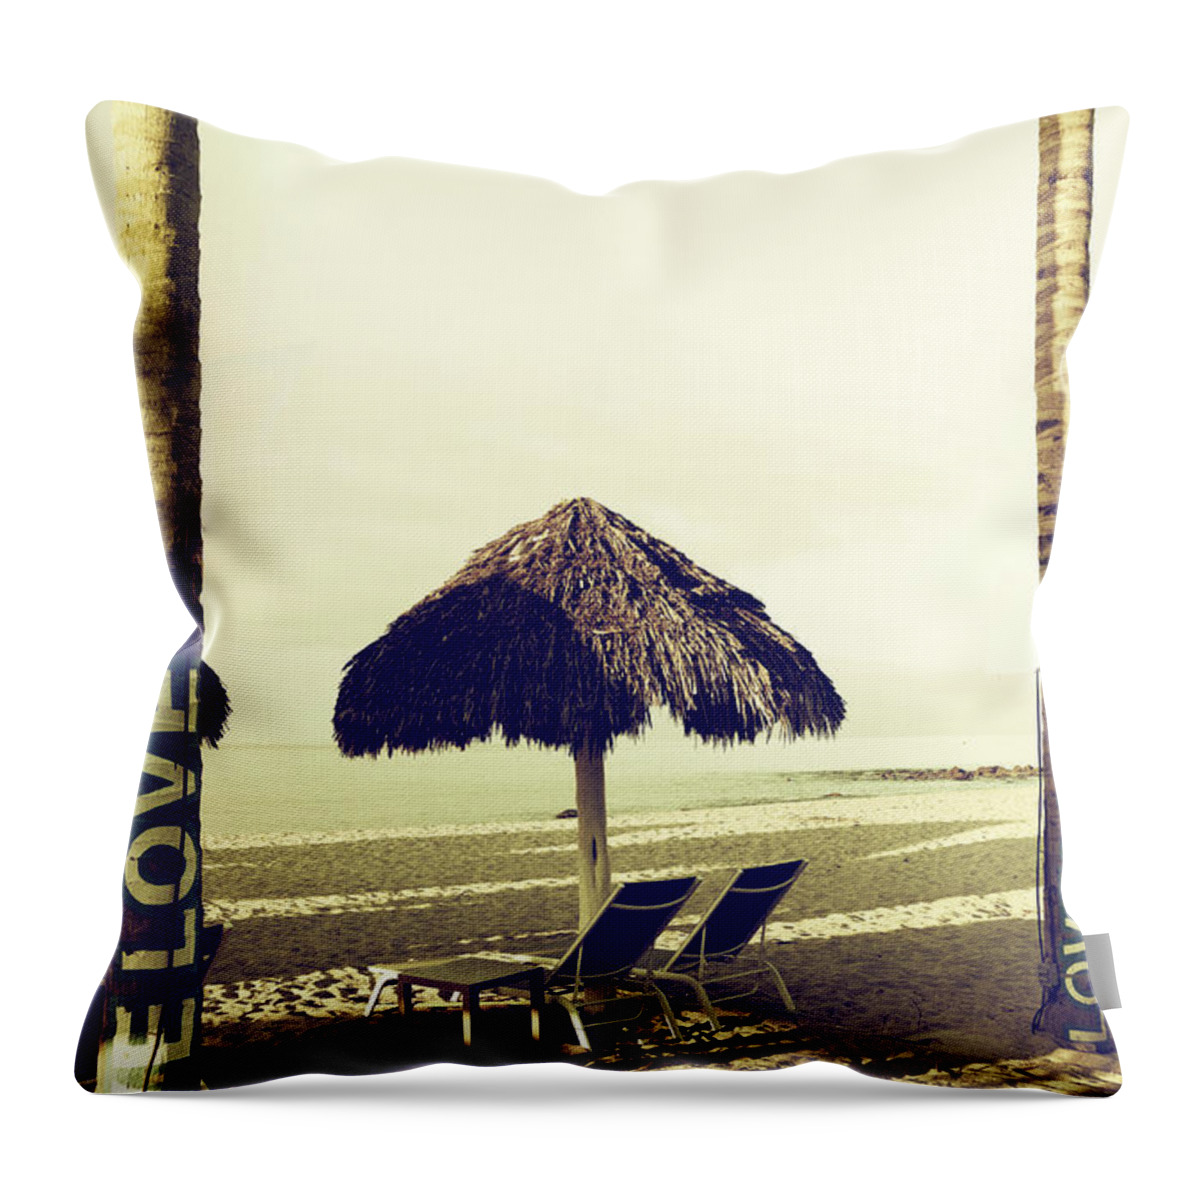 Estock Throw Pillow featuring the digital art Mexico, Nayarit, Beach Scene At La Manzanilla Beach #8 by Claudia Uripos